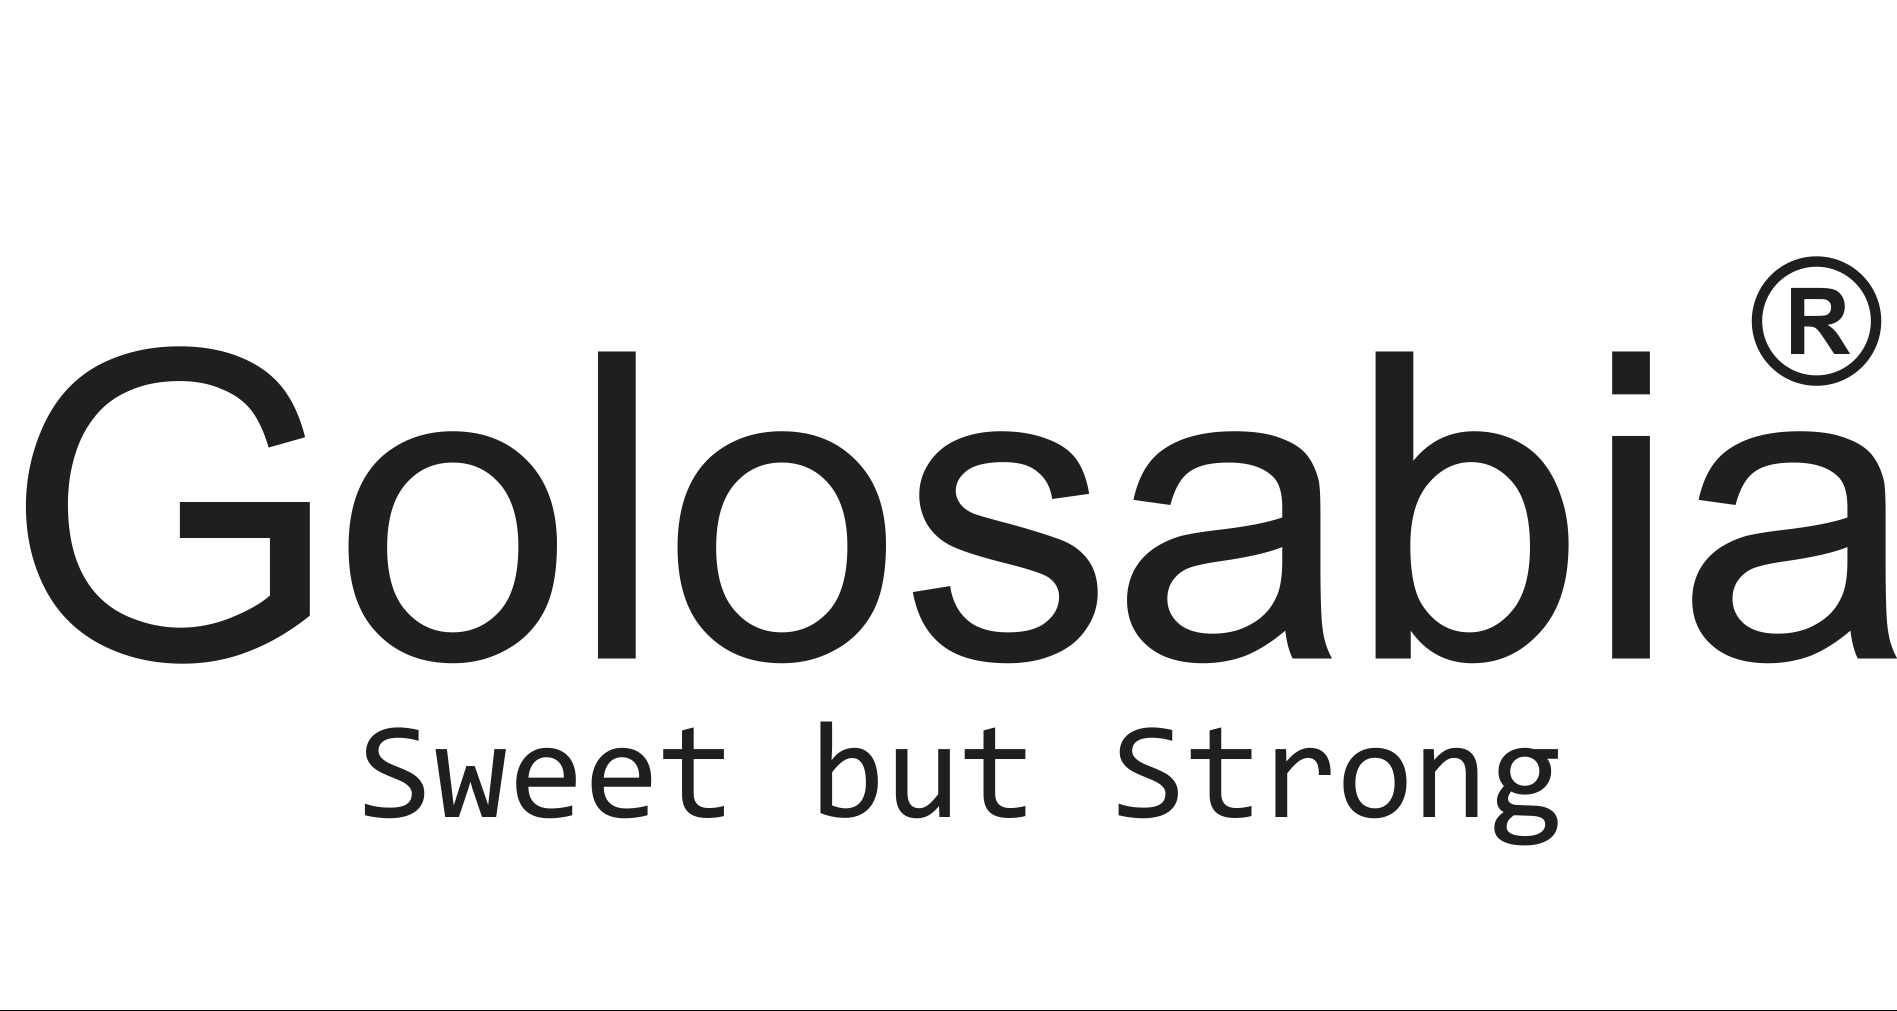 Golosabia Iran - Sweet, but Strong